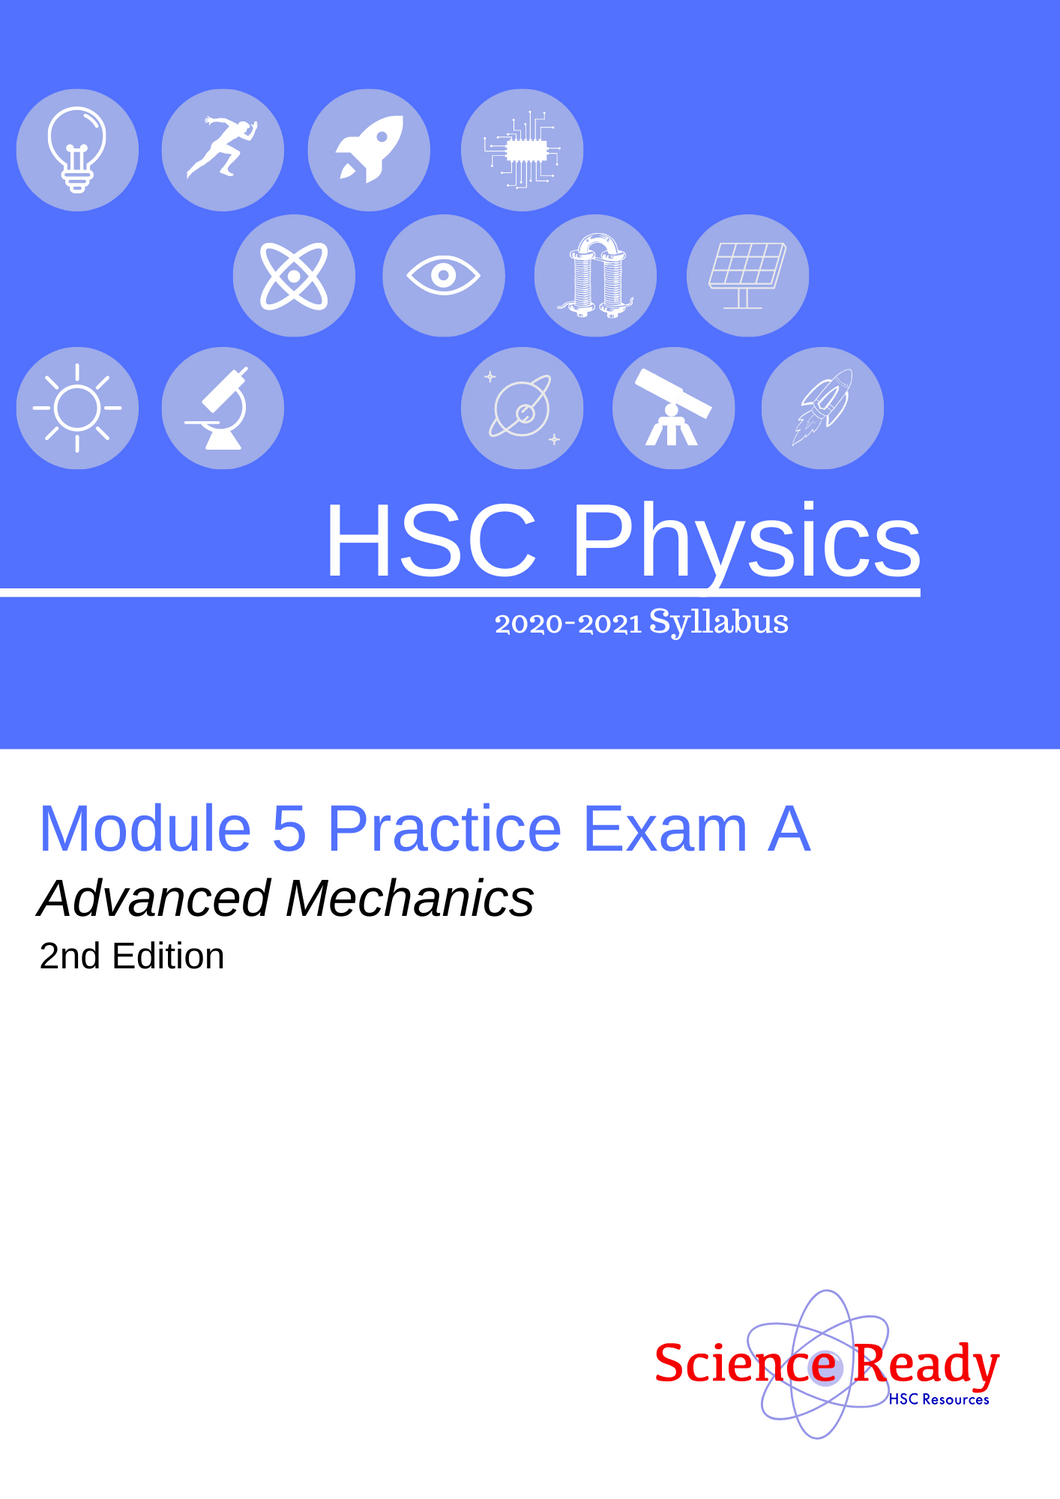 HSC Physics Module 5 Practice Exam A (2019)